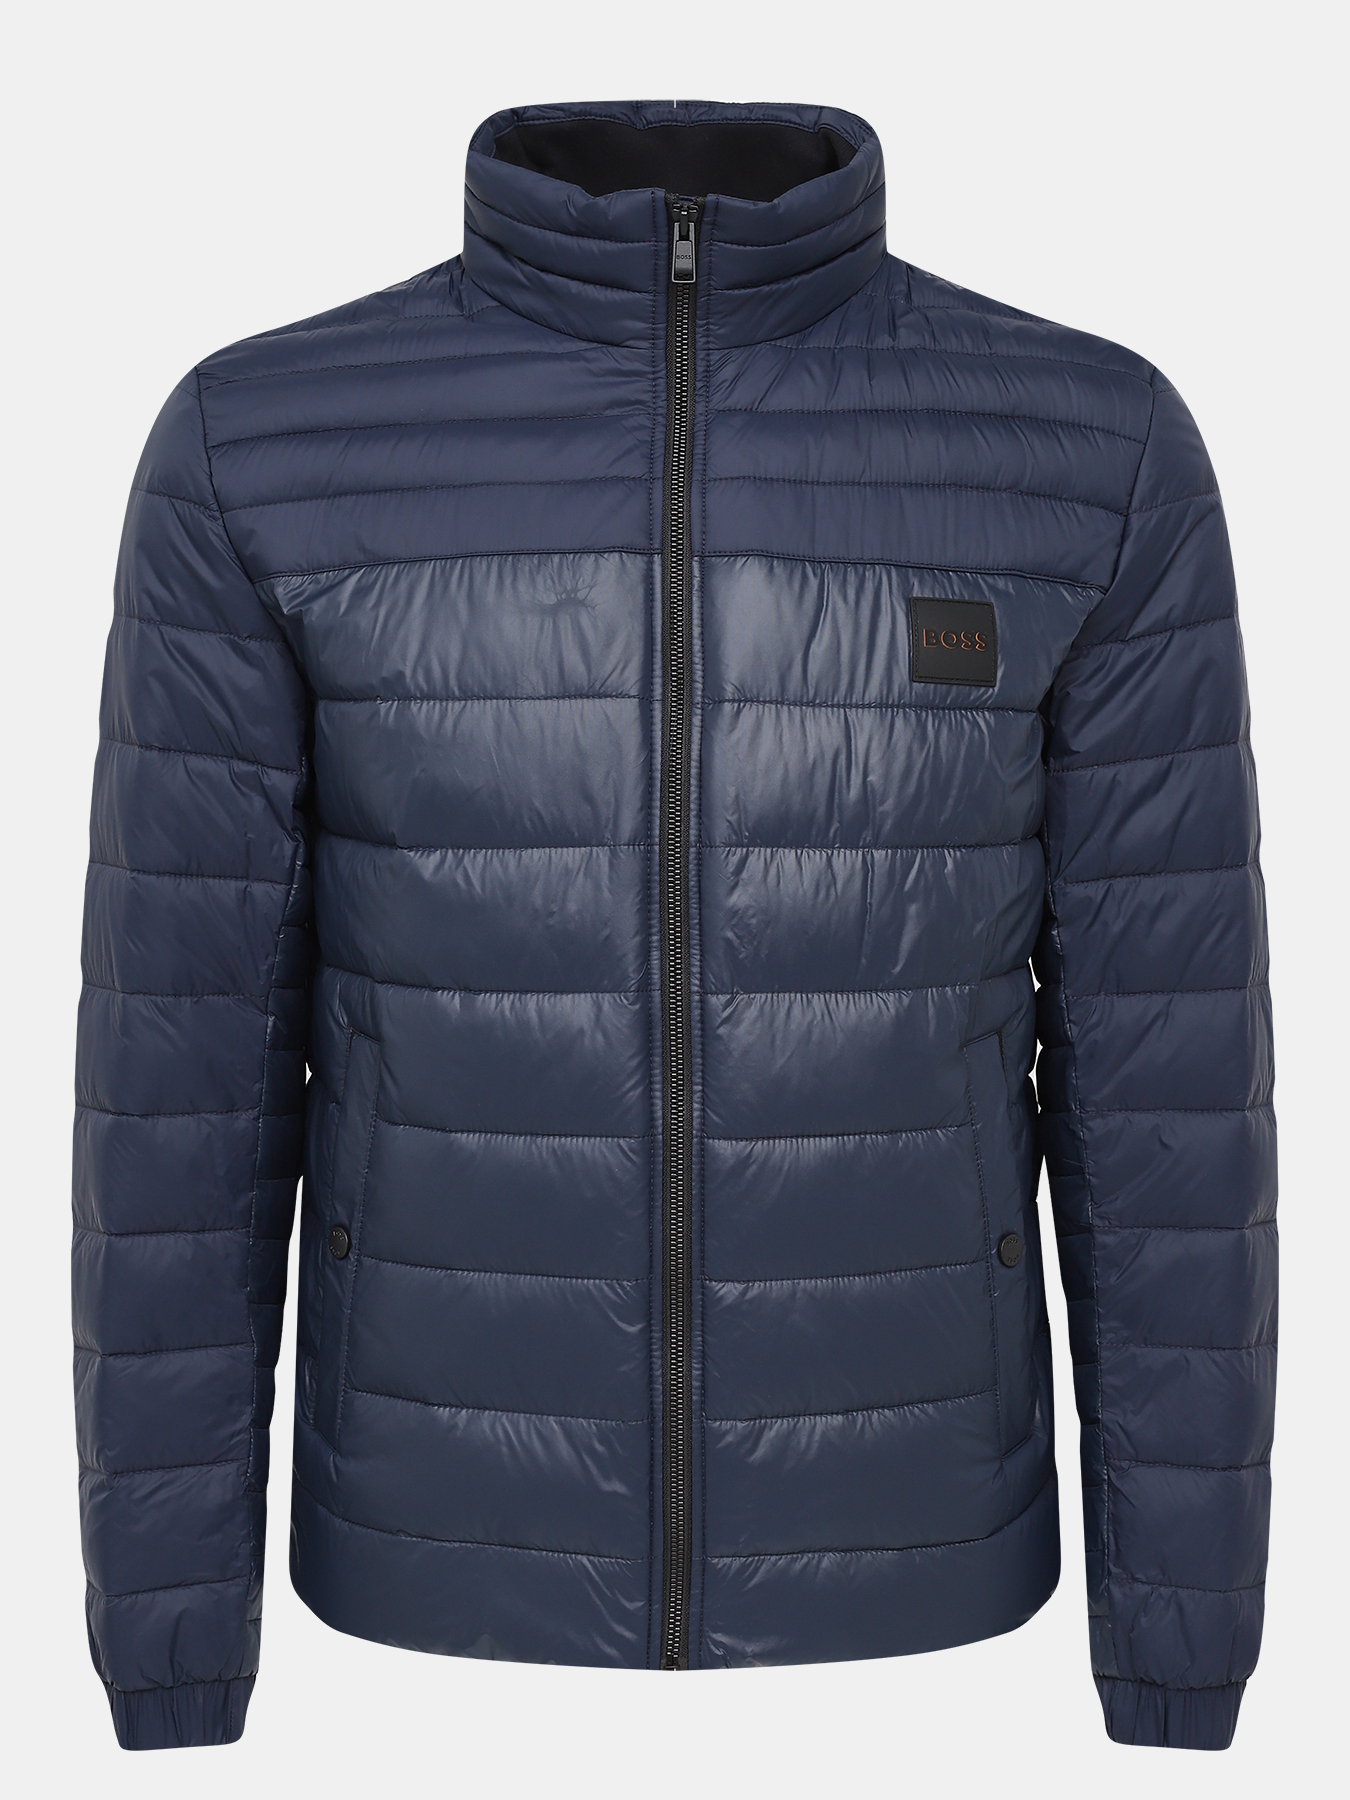 Куртка Oden BOSS 434079-025, цвет темно-синий, размер 48 - фото 1